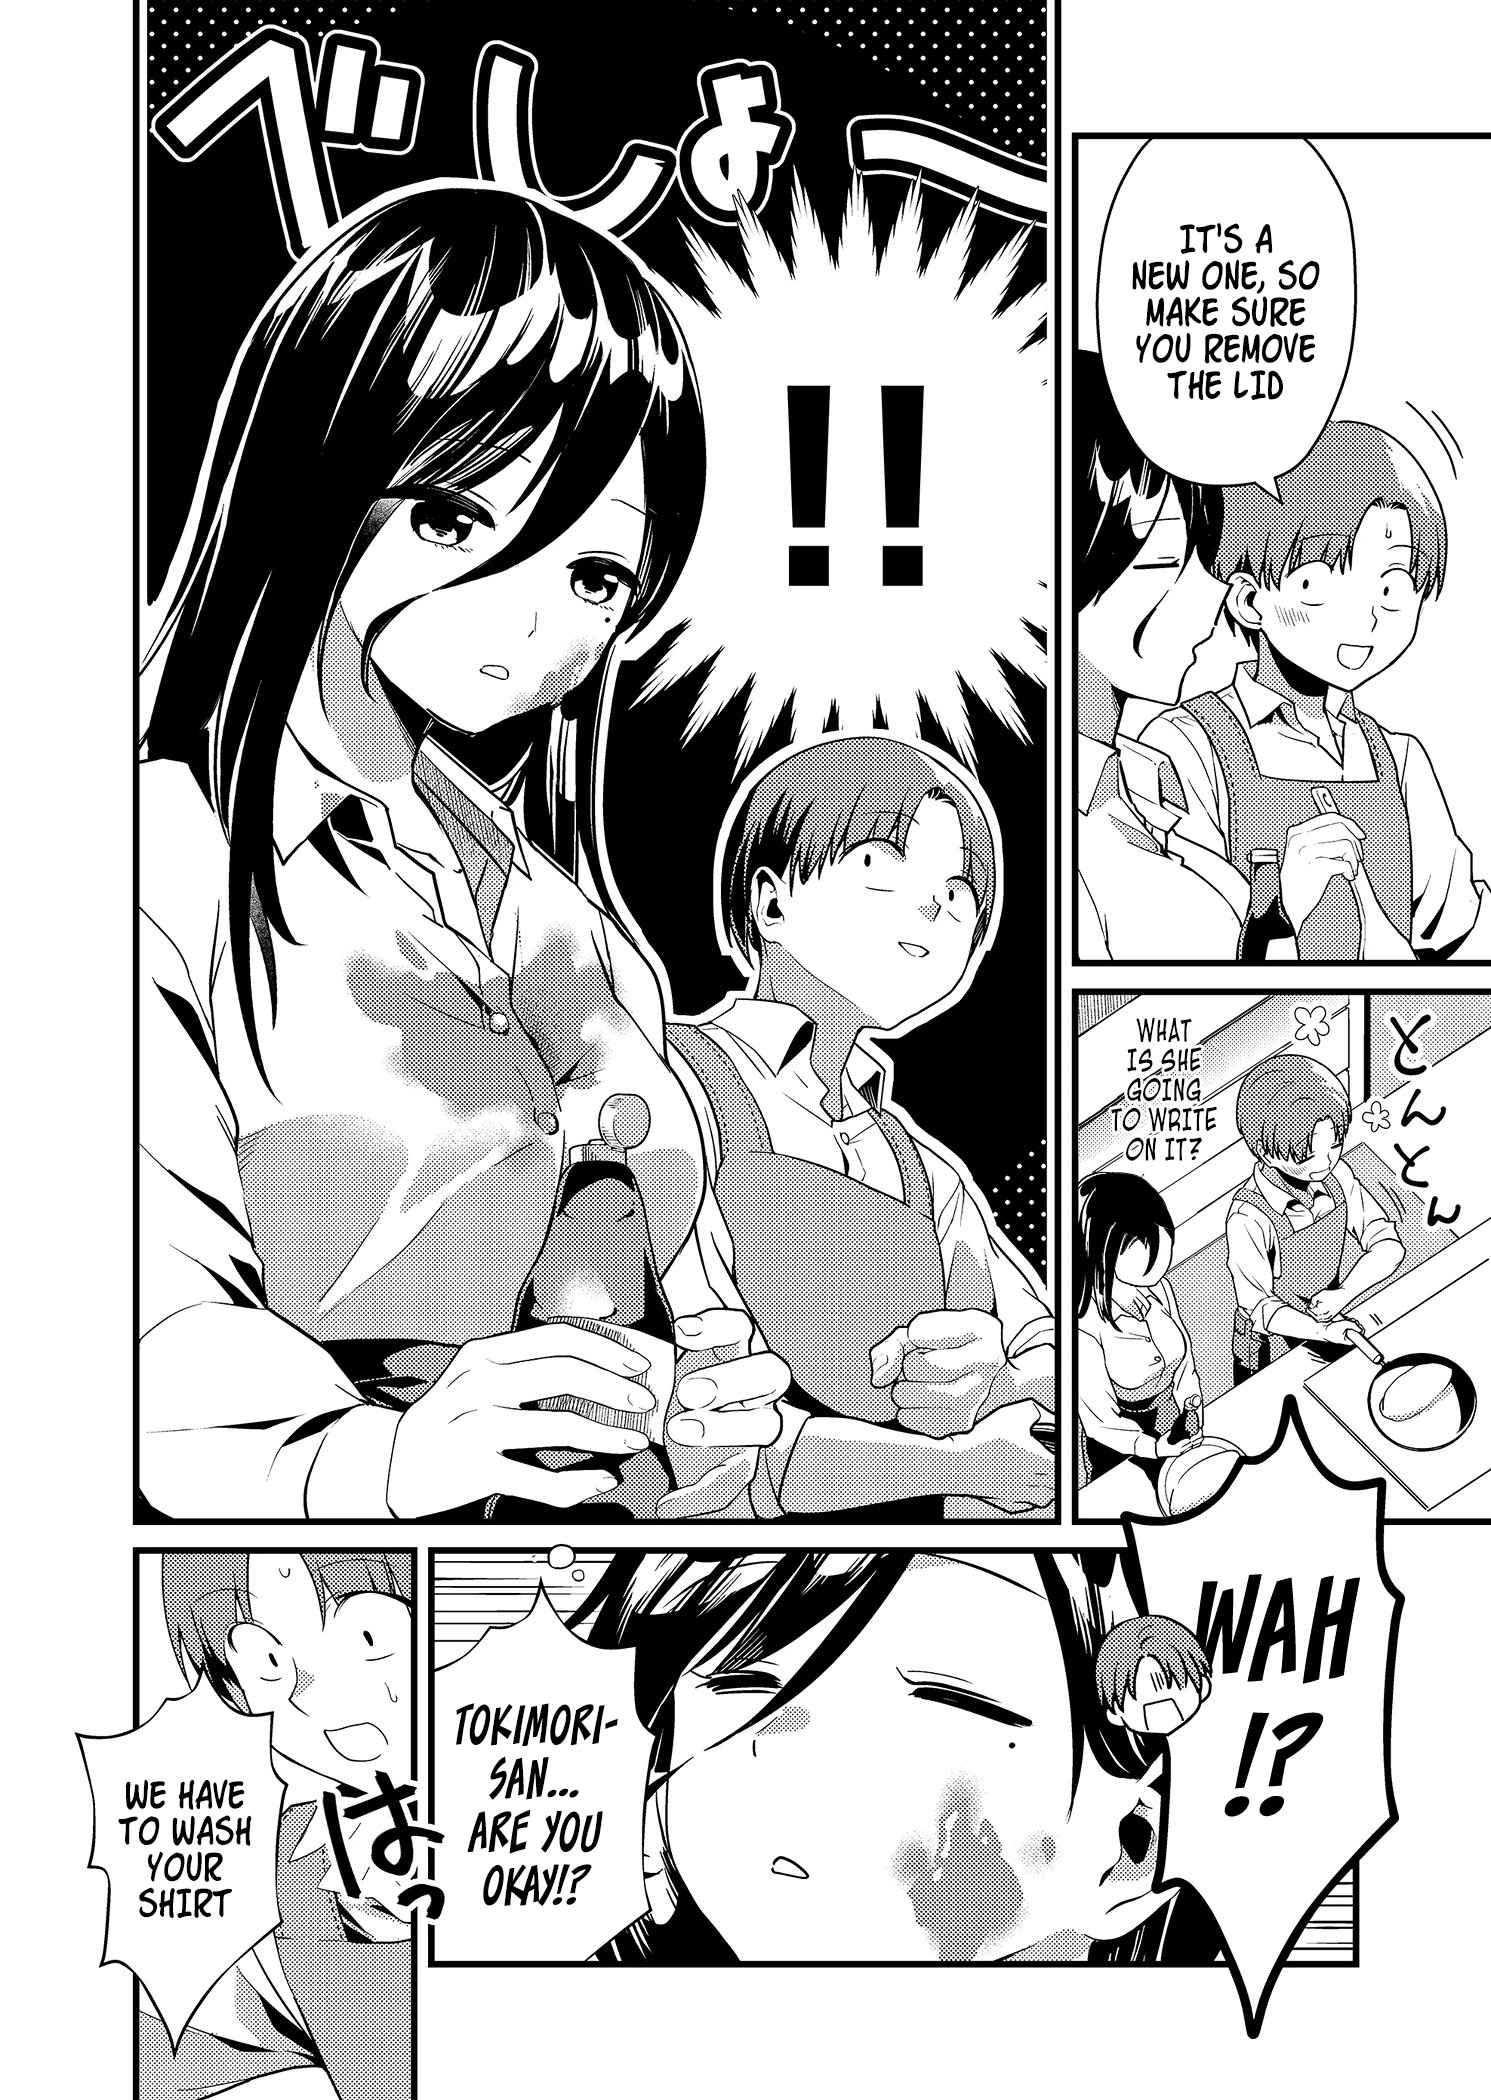 Tokimari-san is Completely Defenseless!! Chapter 3-eng-li - Page 6